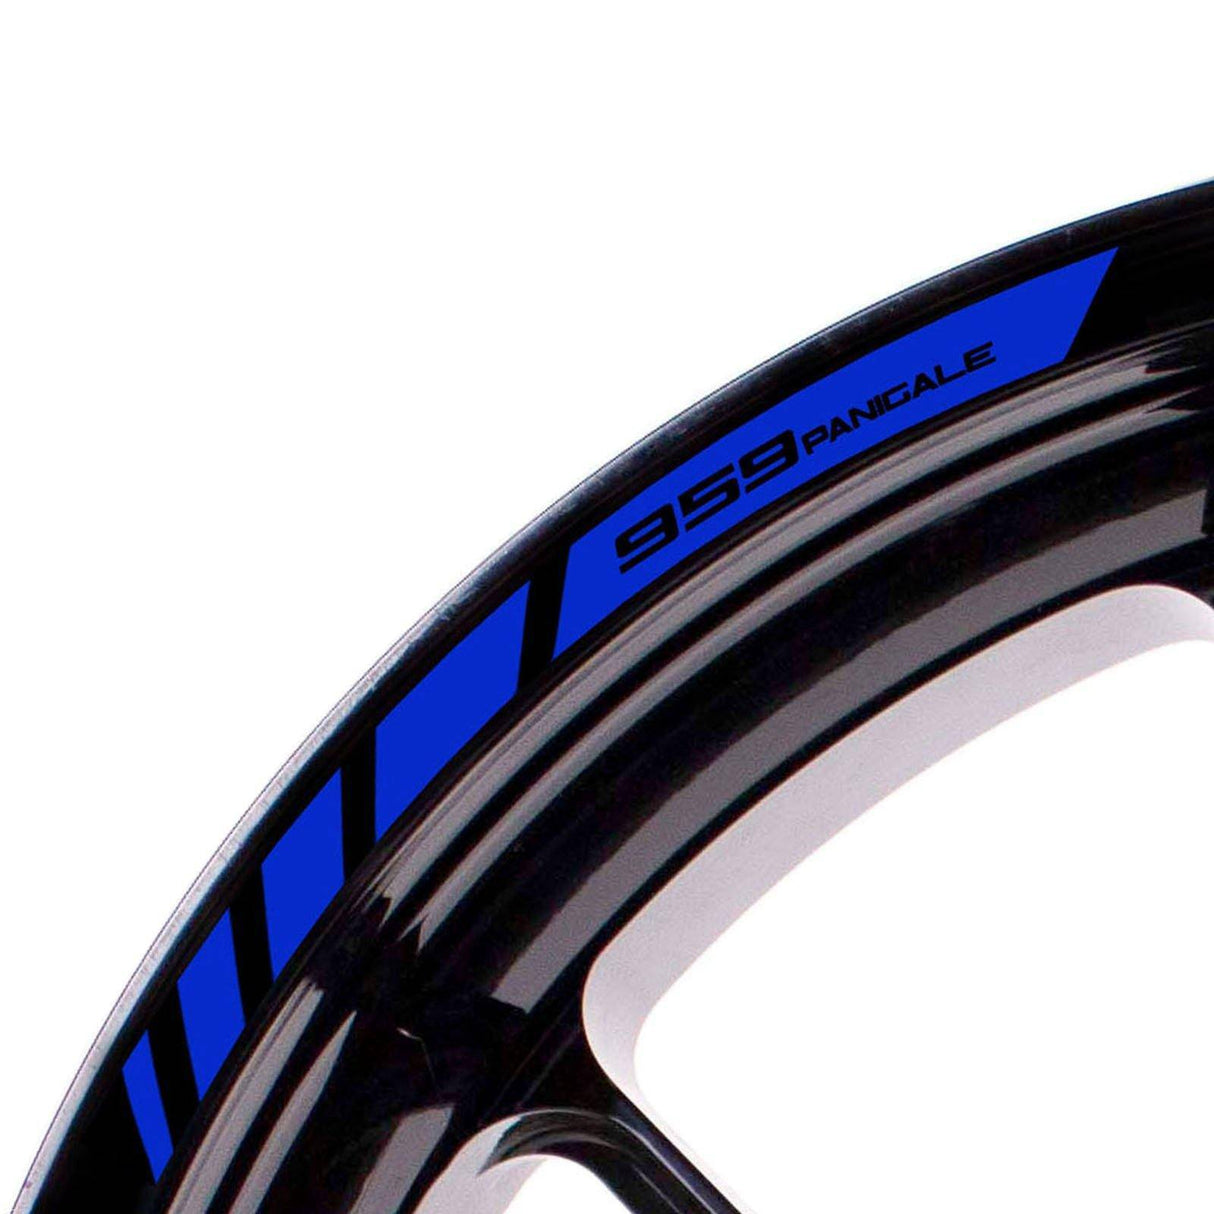 For Ducati 959 Panigale Logo 17 inch Rim Wheel Stickers MM01B Rim Edge Tapes.